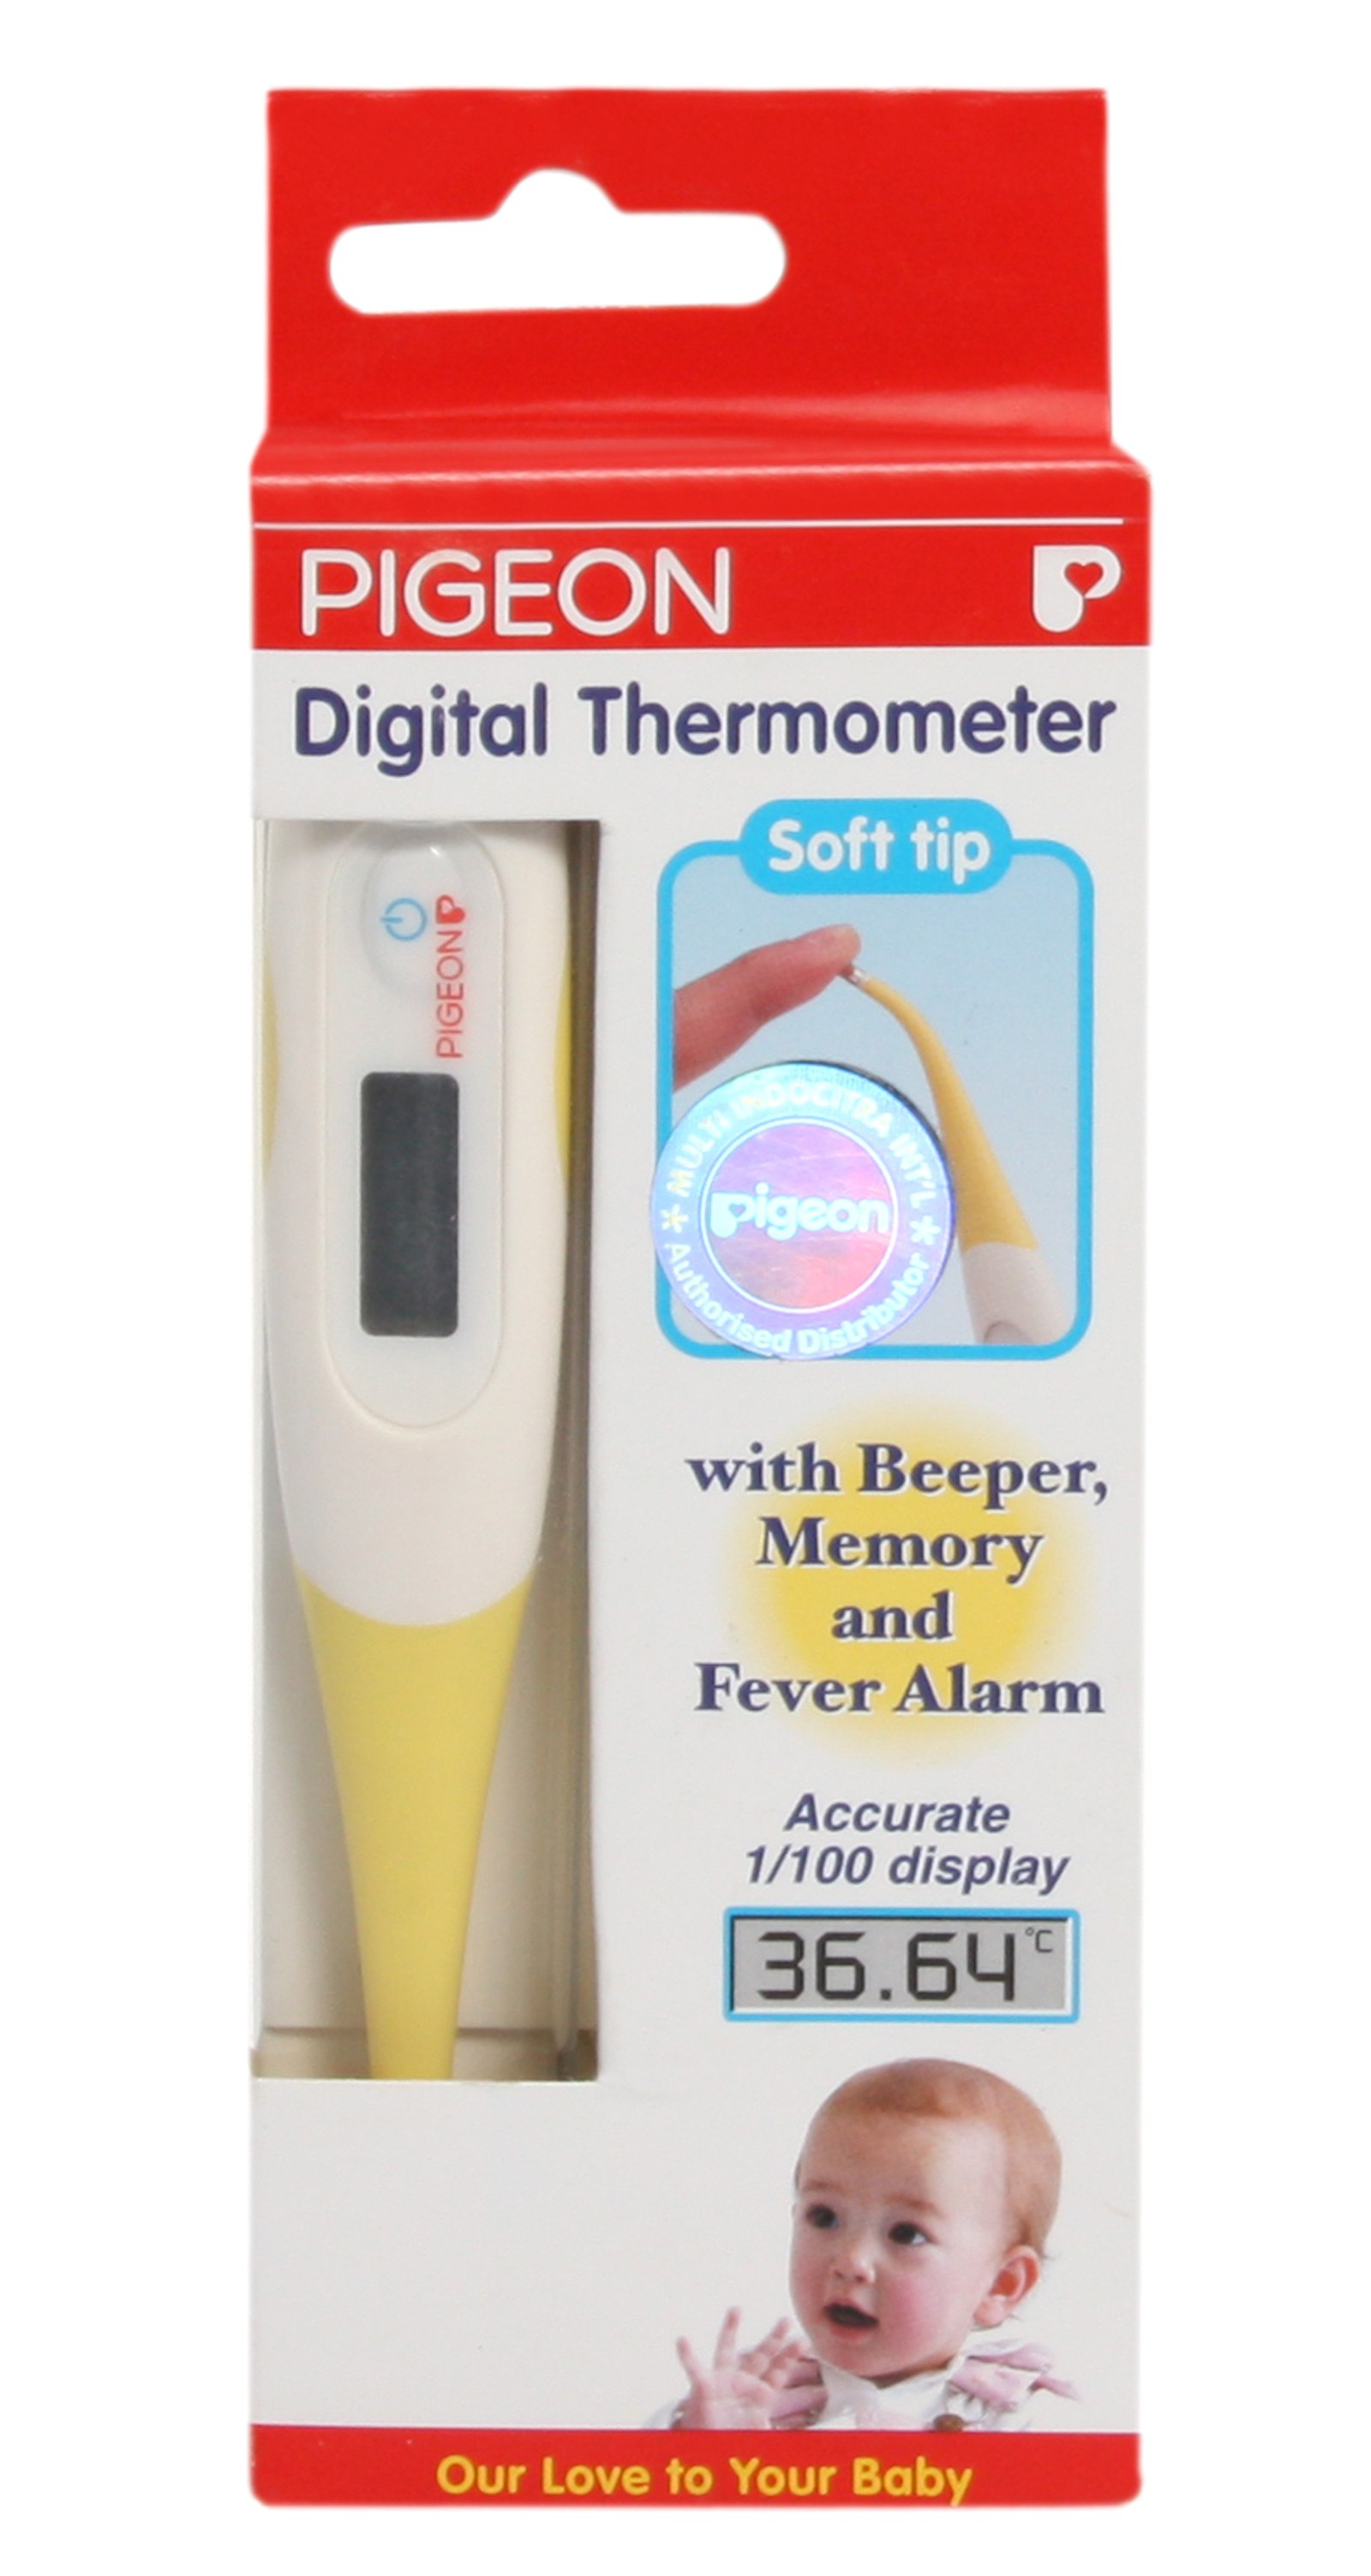 Pigeon - Digital Thermometer